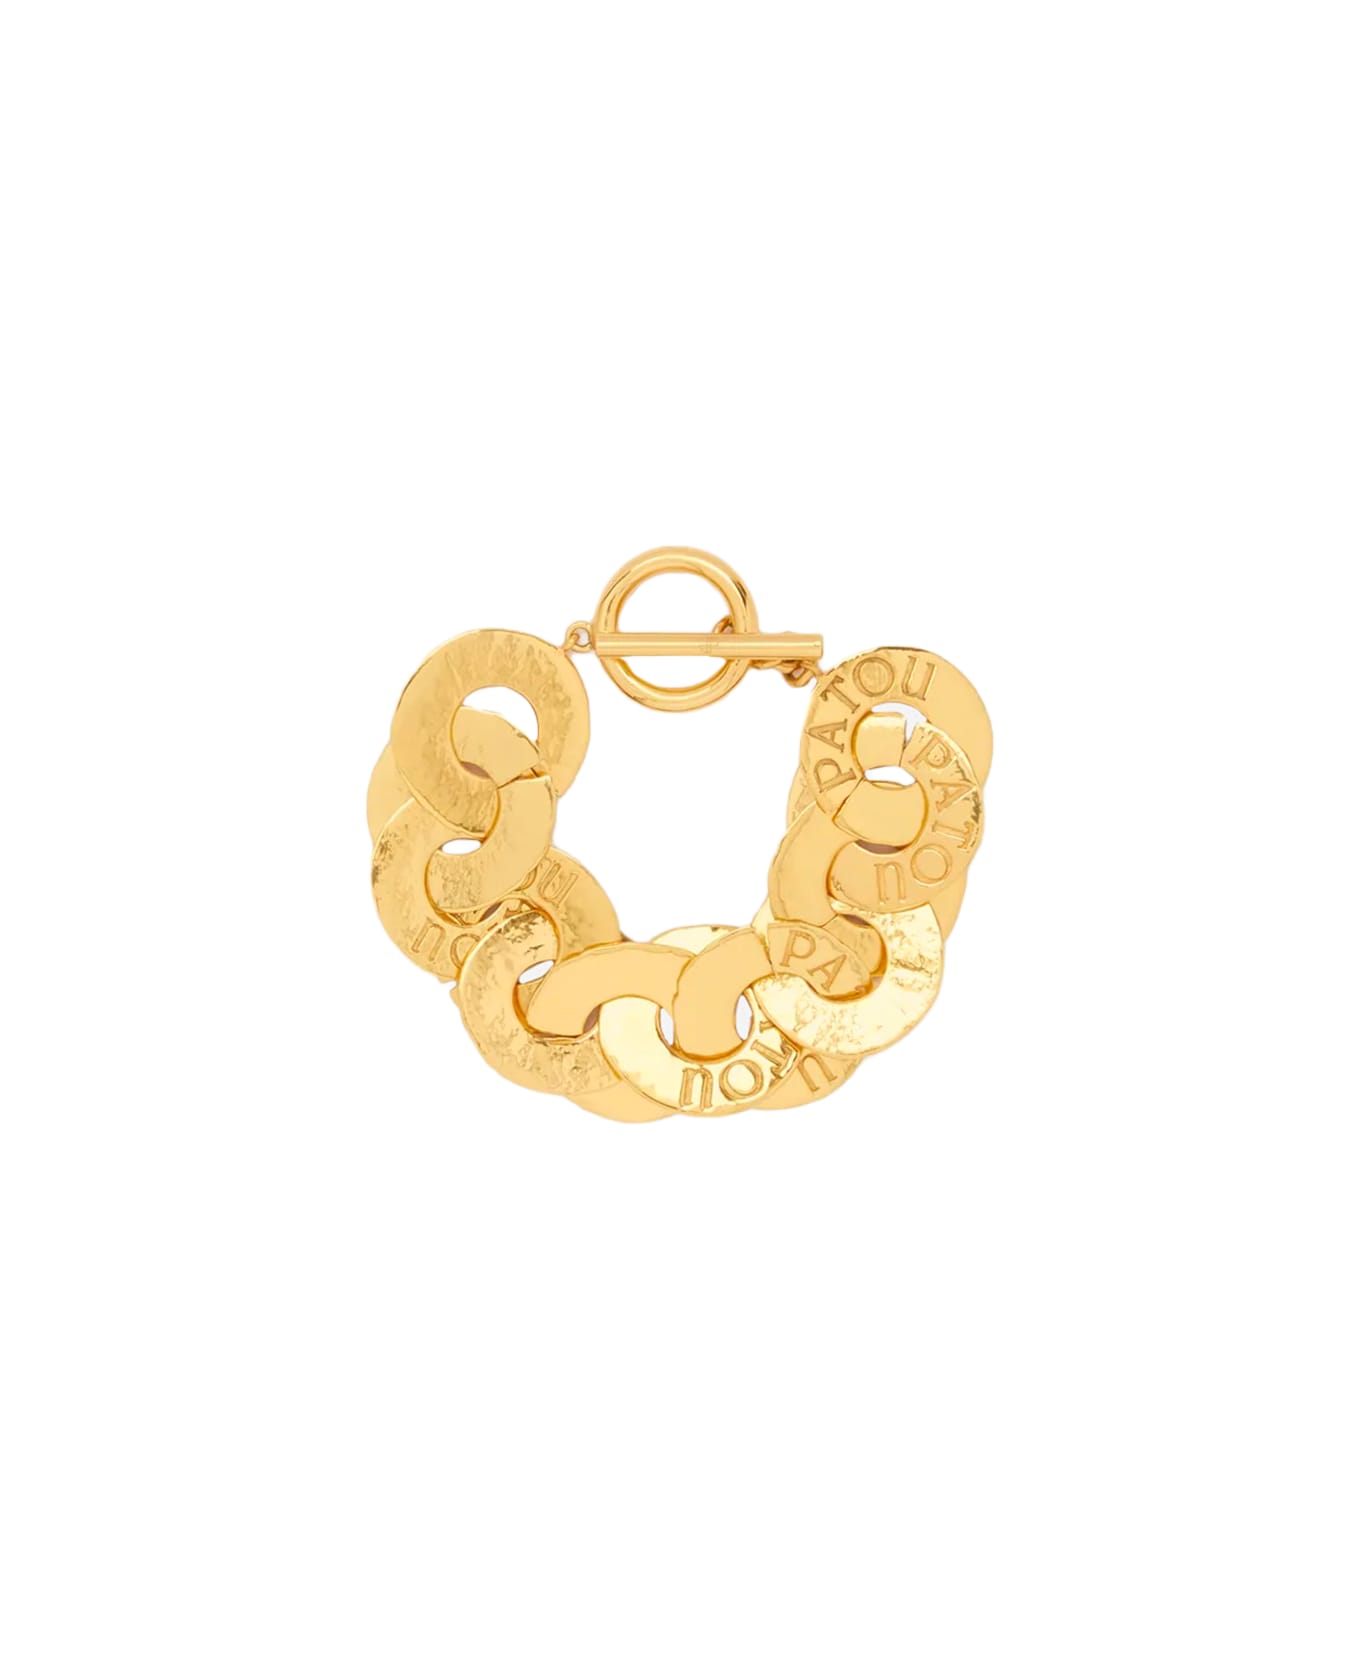 Patou Brass Bracelet With Engraved Logo - Golden